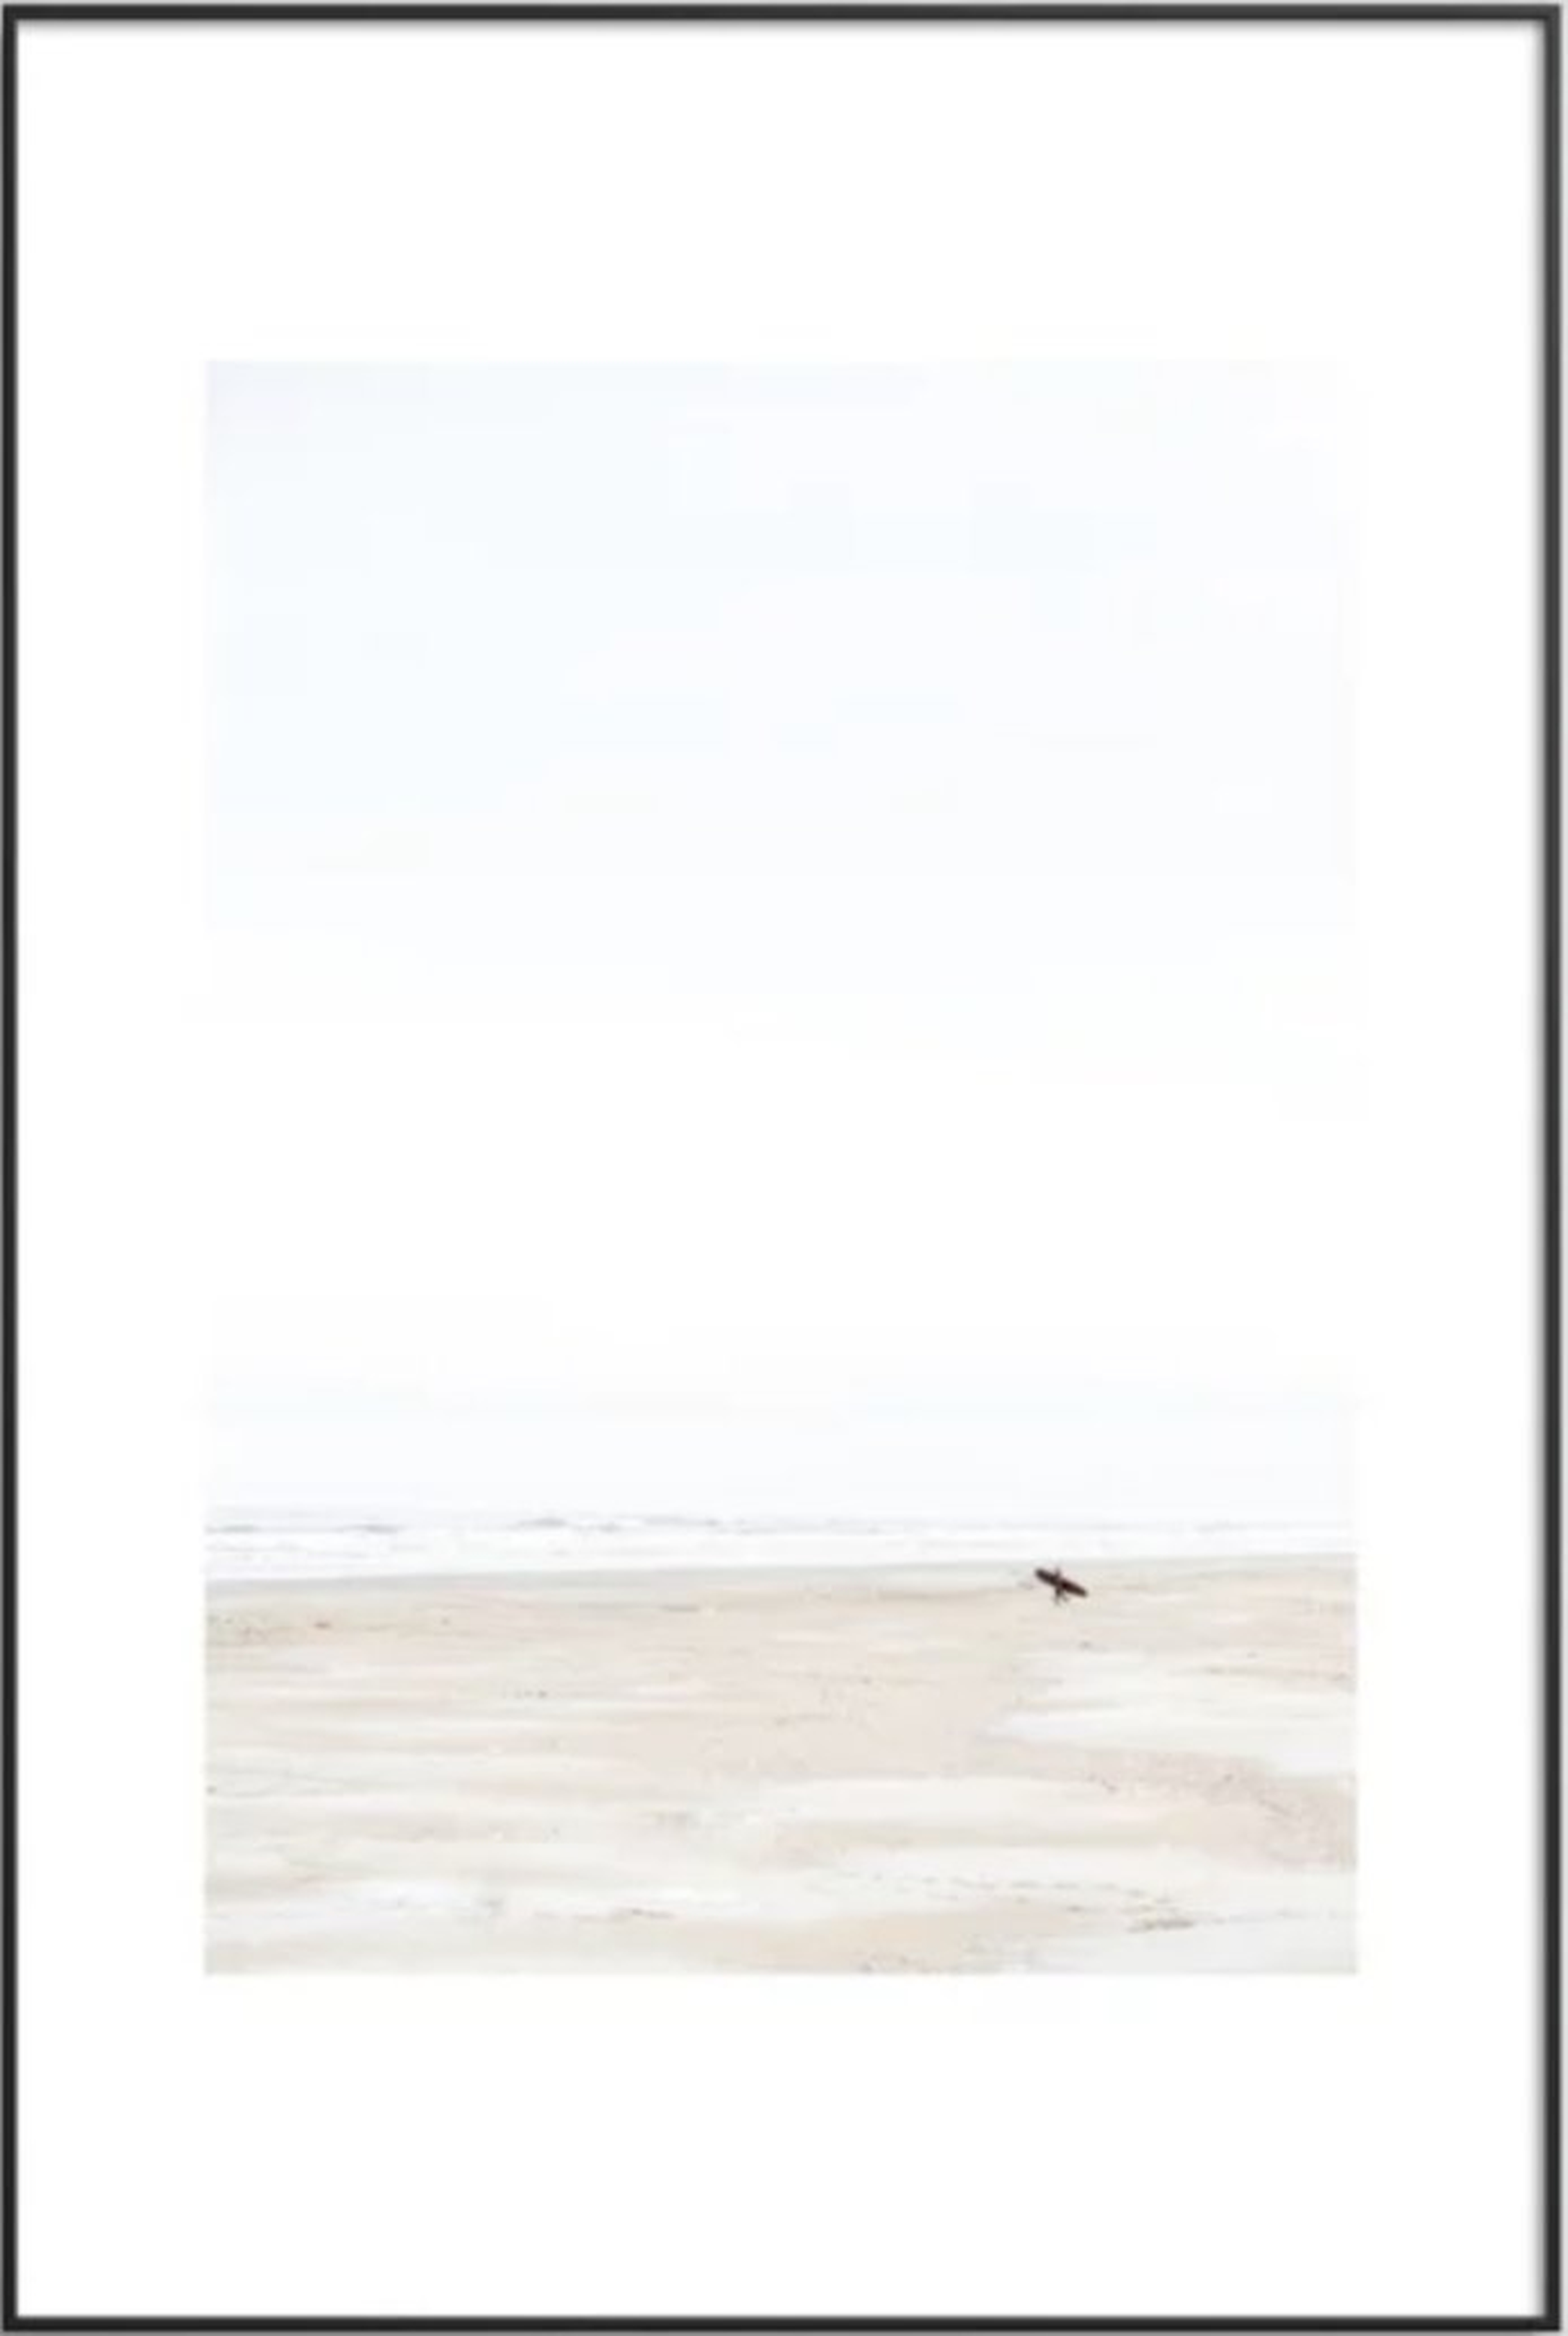 The Lone Surfer, Framed Print, 24x36 - Society6